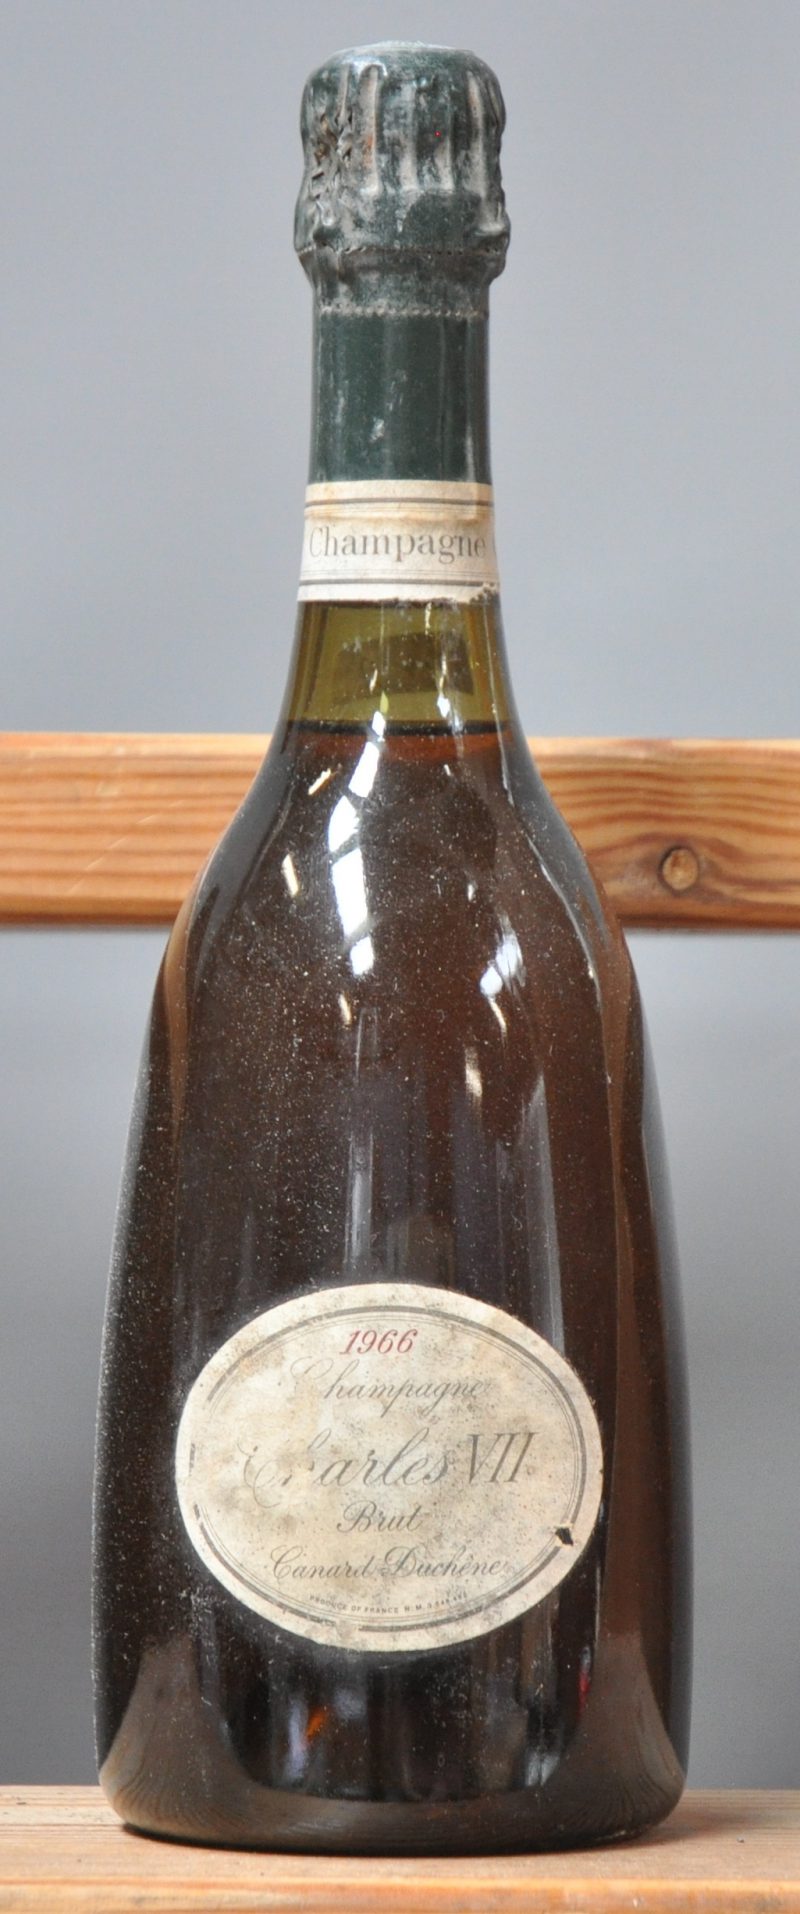 Canard-Duchène Charles VII Brut A.O.C. Champagne     1966  aantal: 1 Bt.